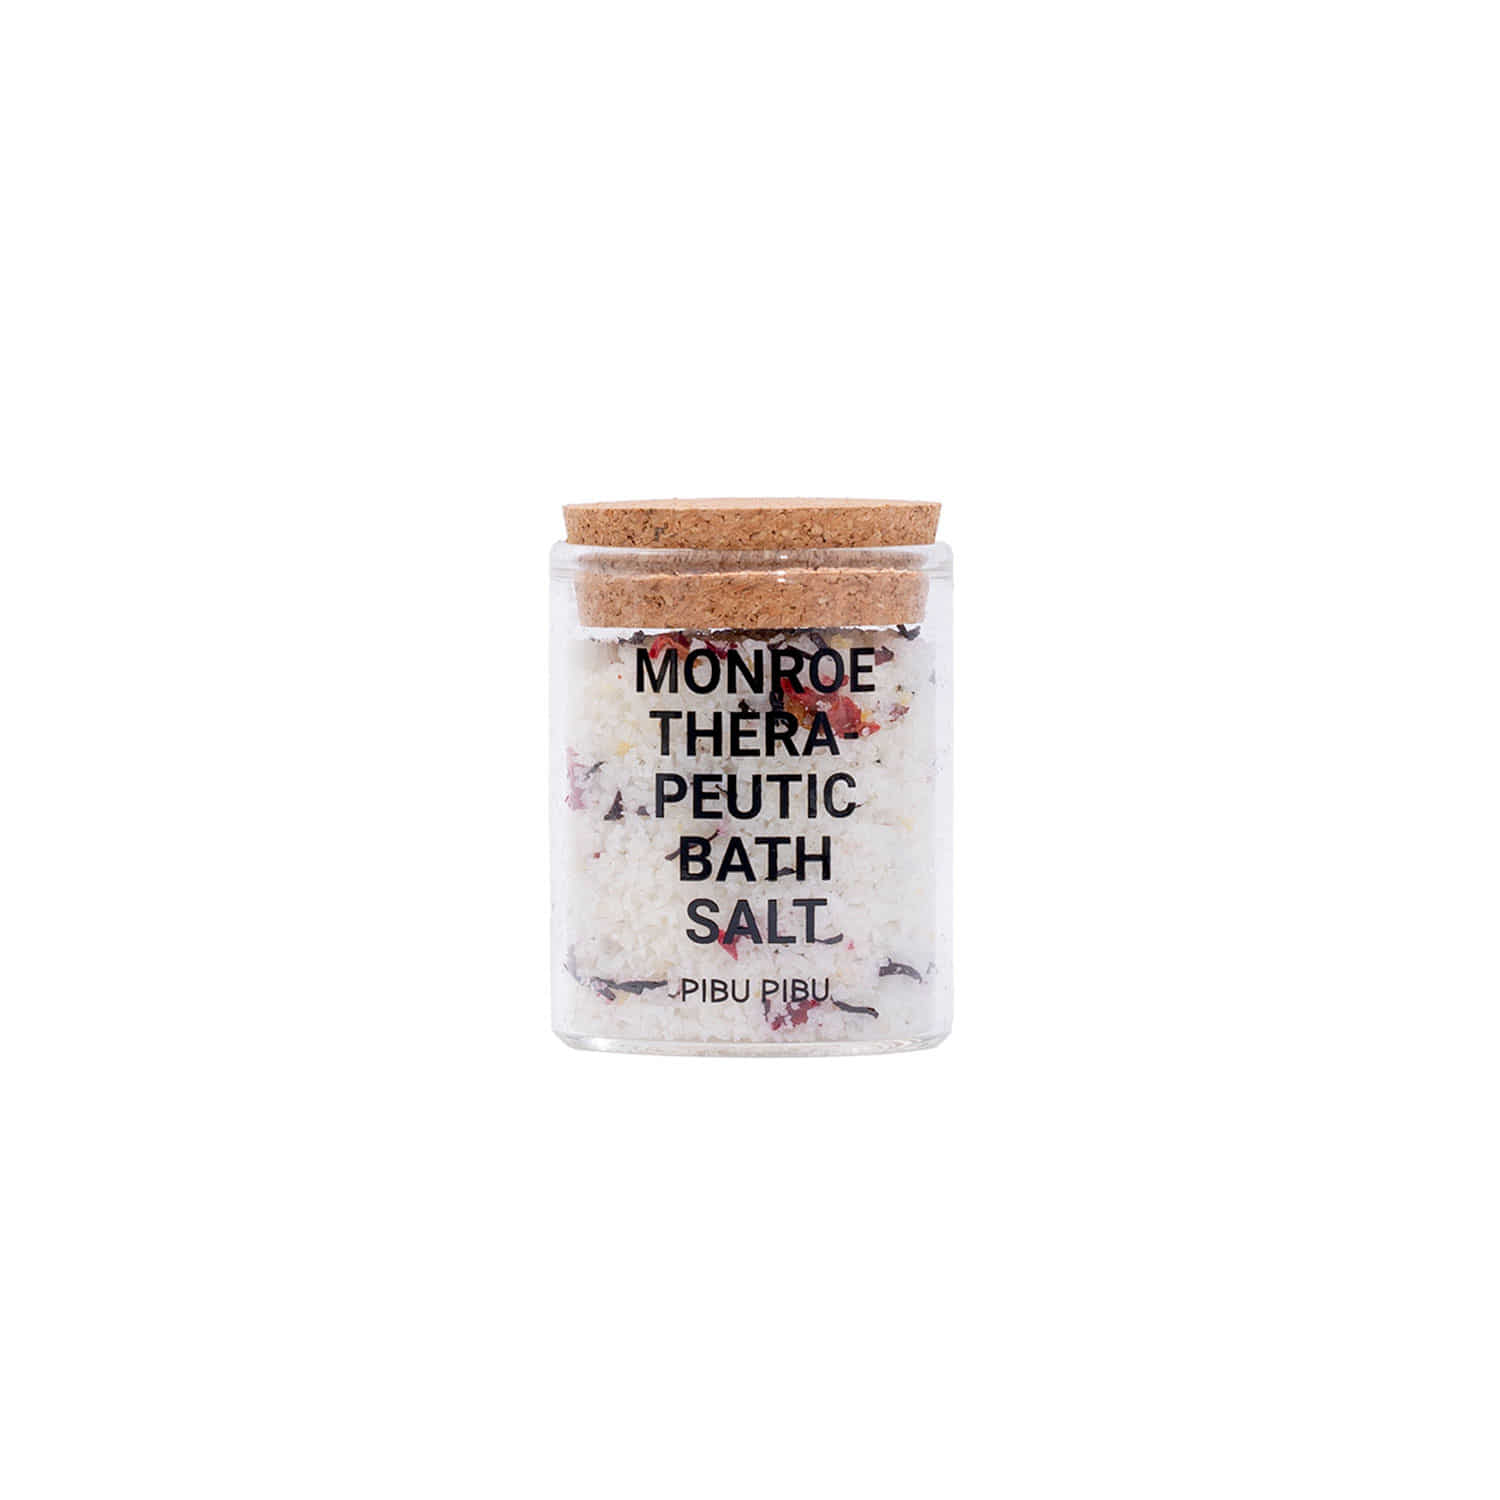 Thera-peutic Bath salt, Monroe sensual 130